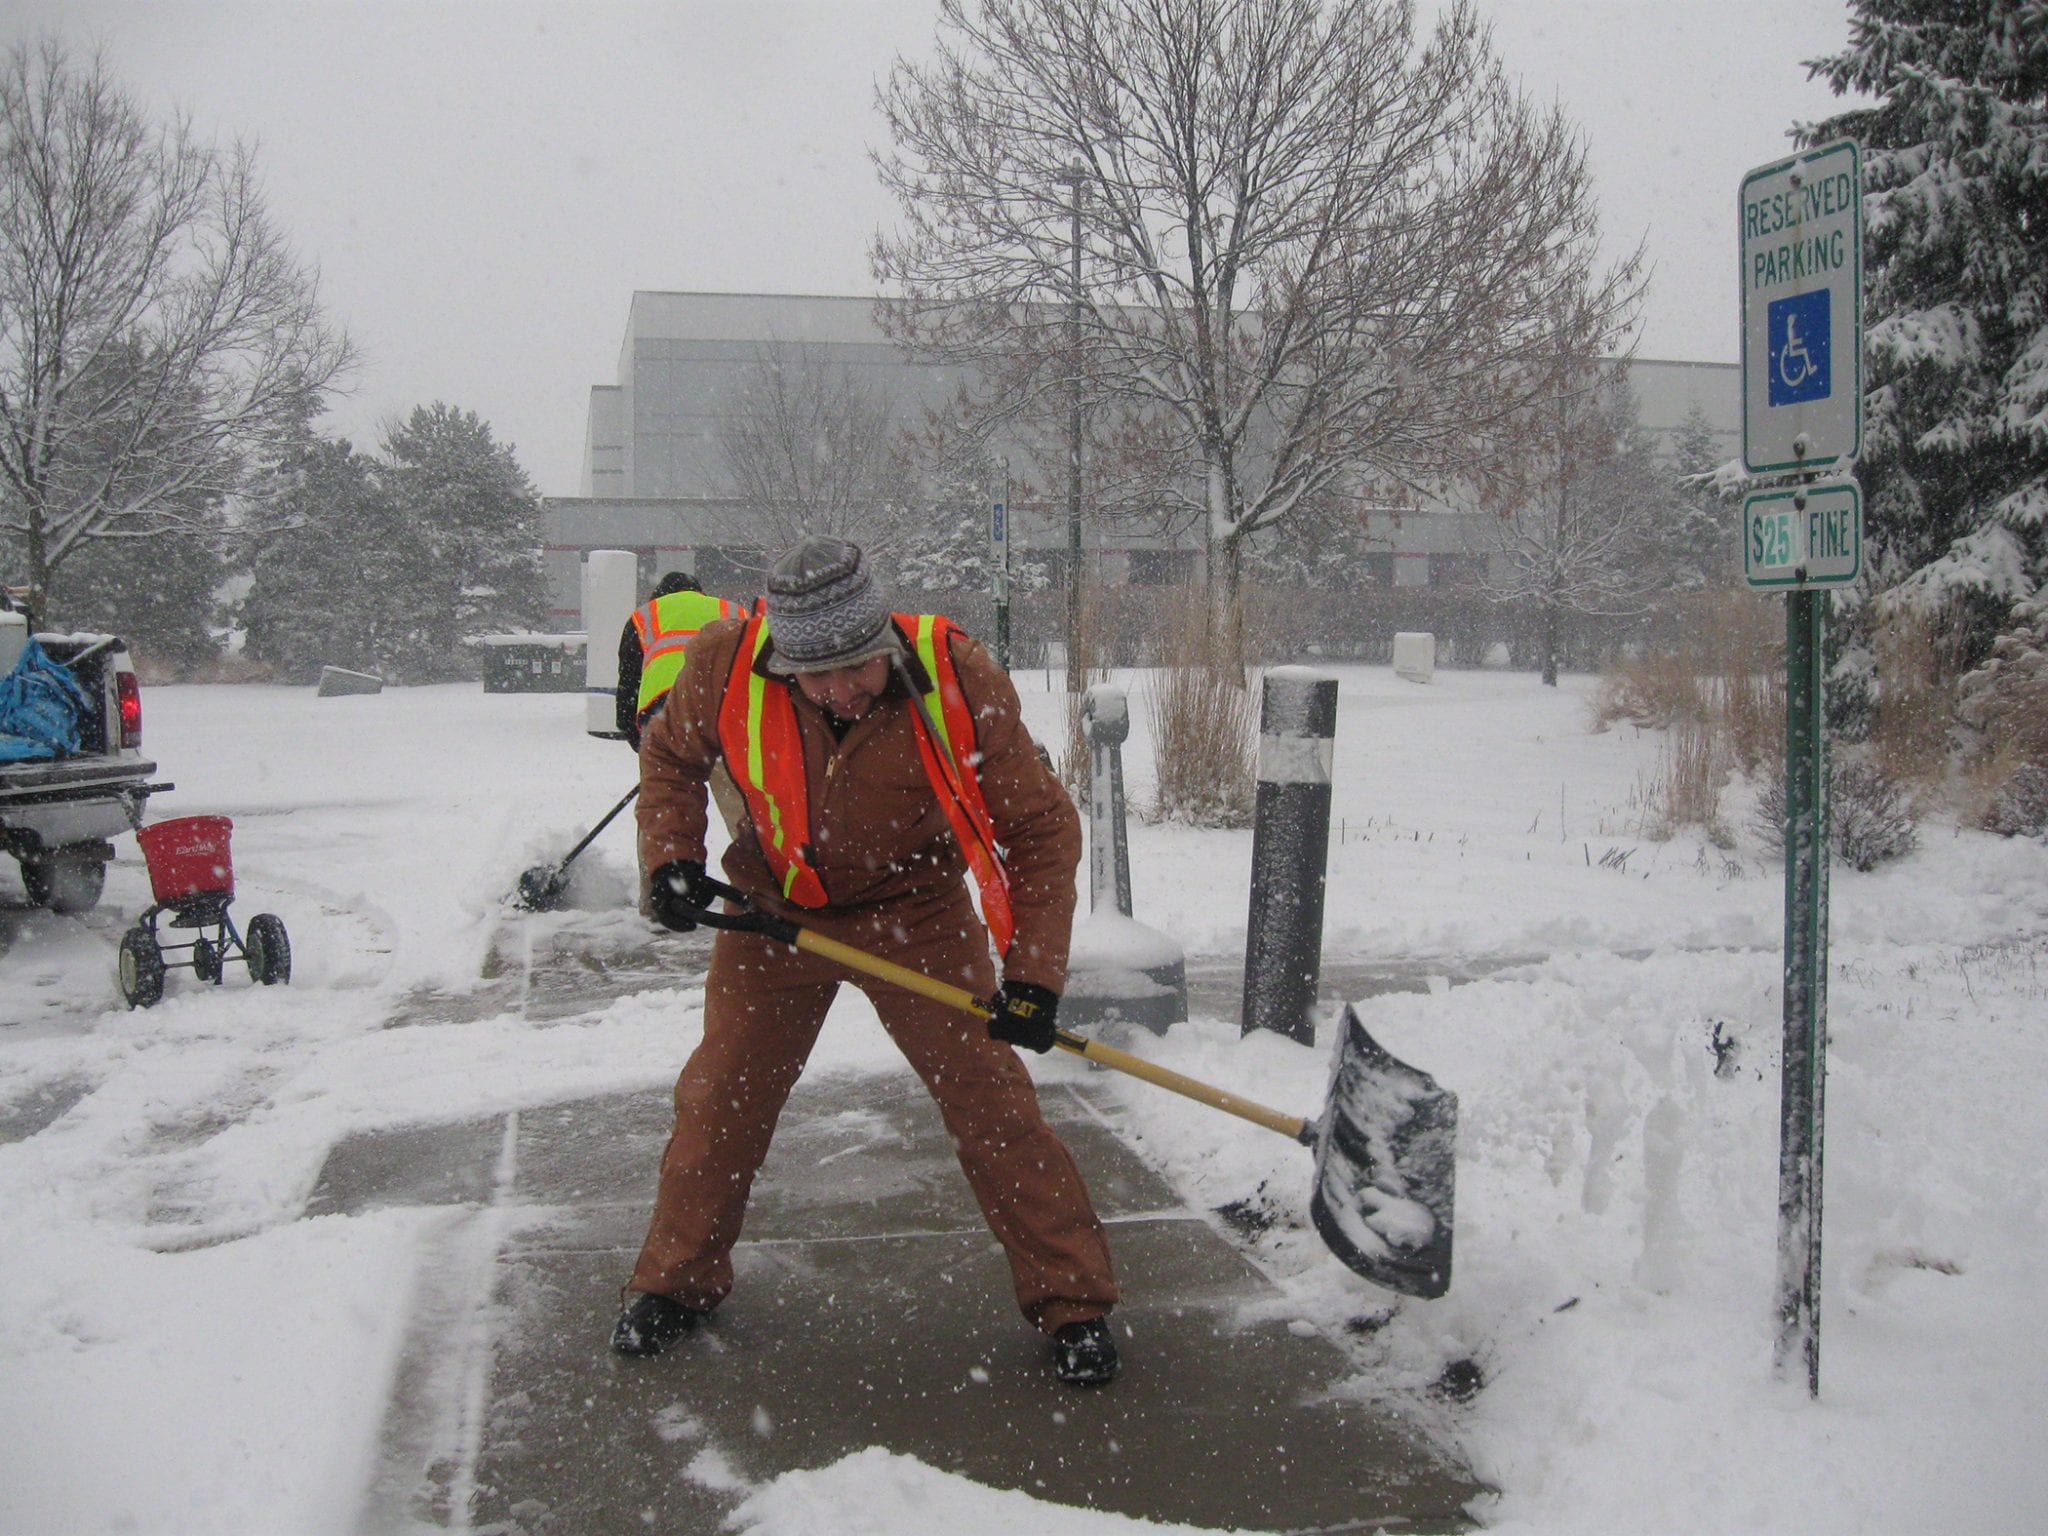 crew members shoveling snow in winter